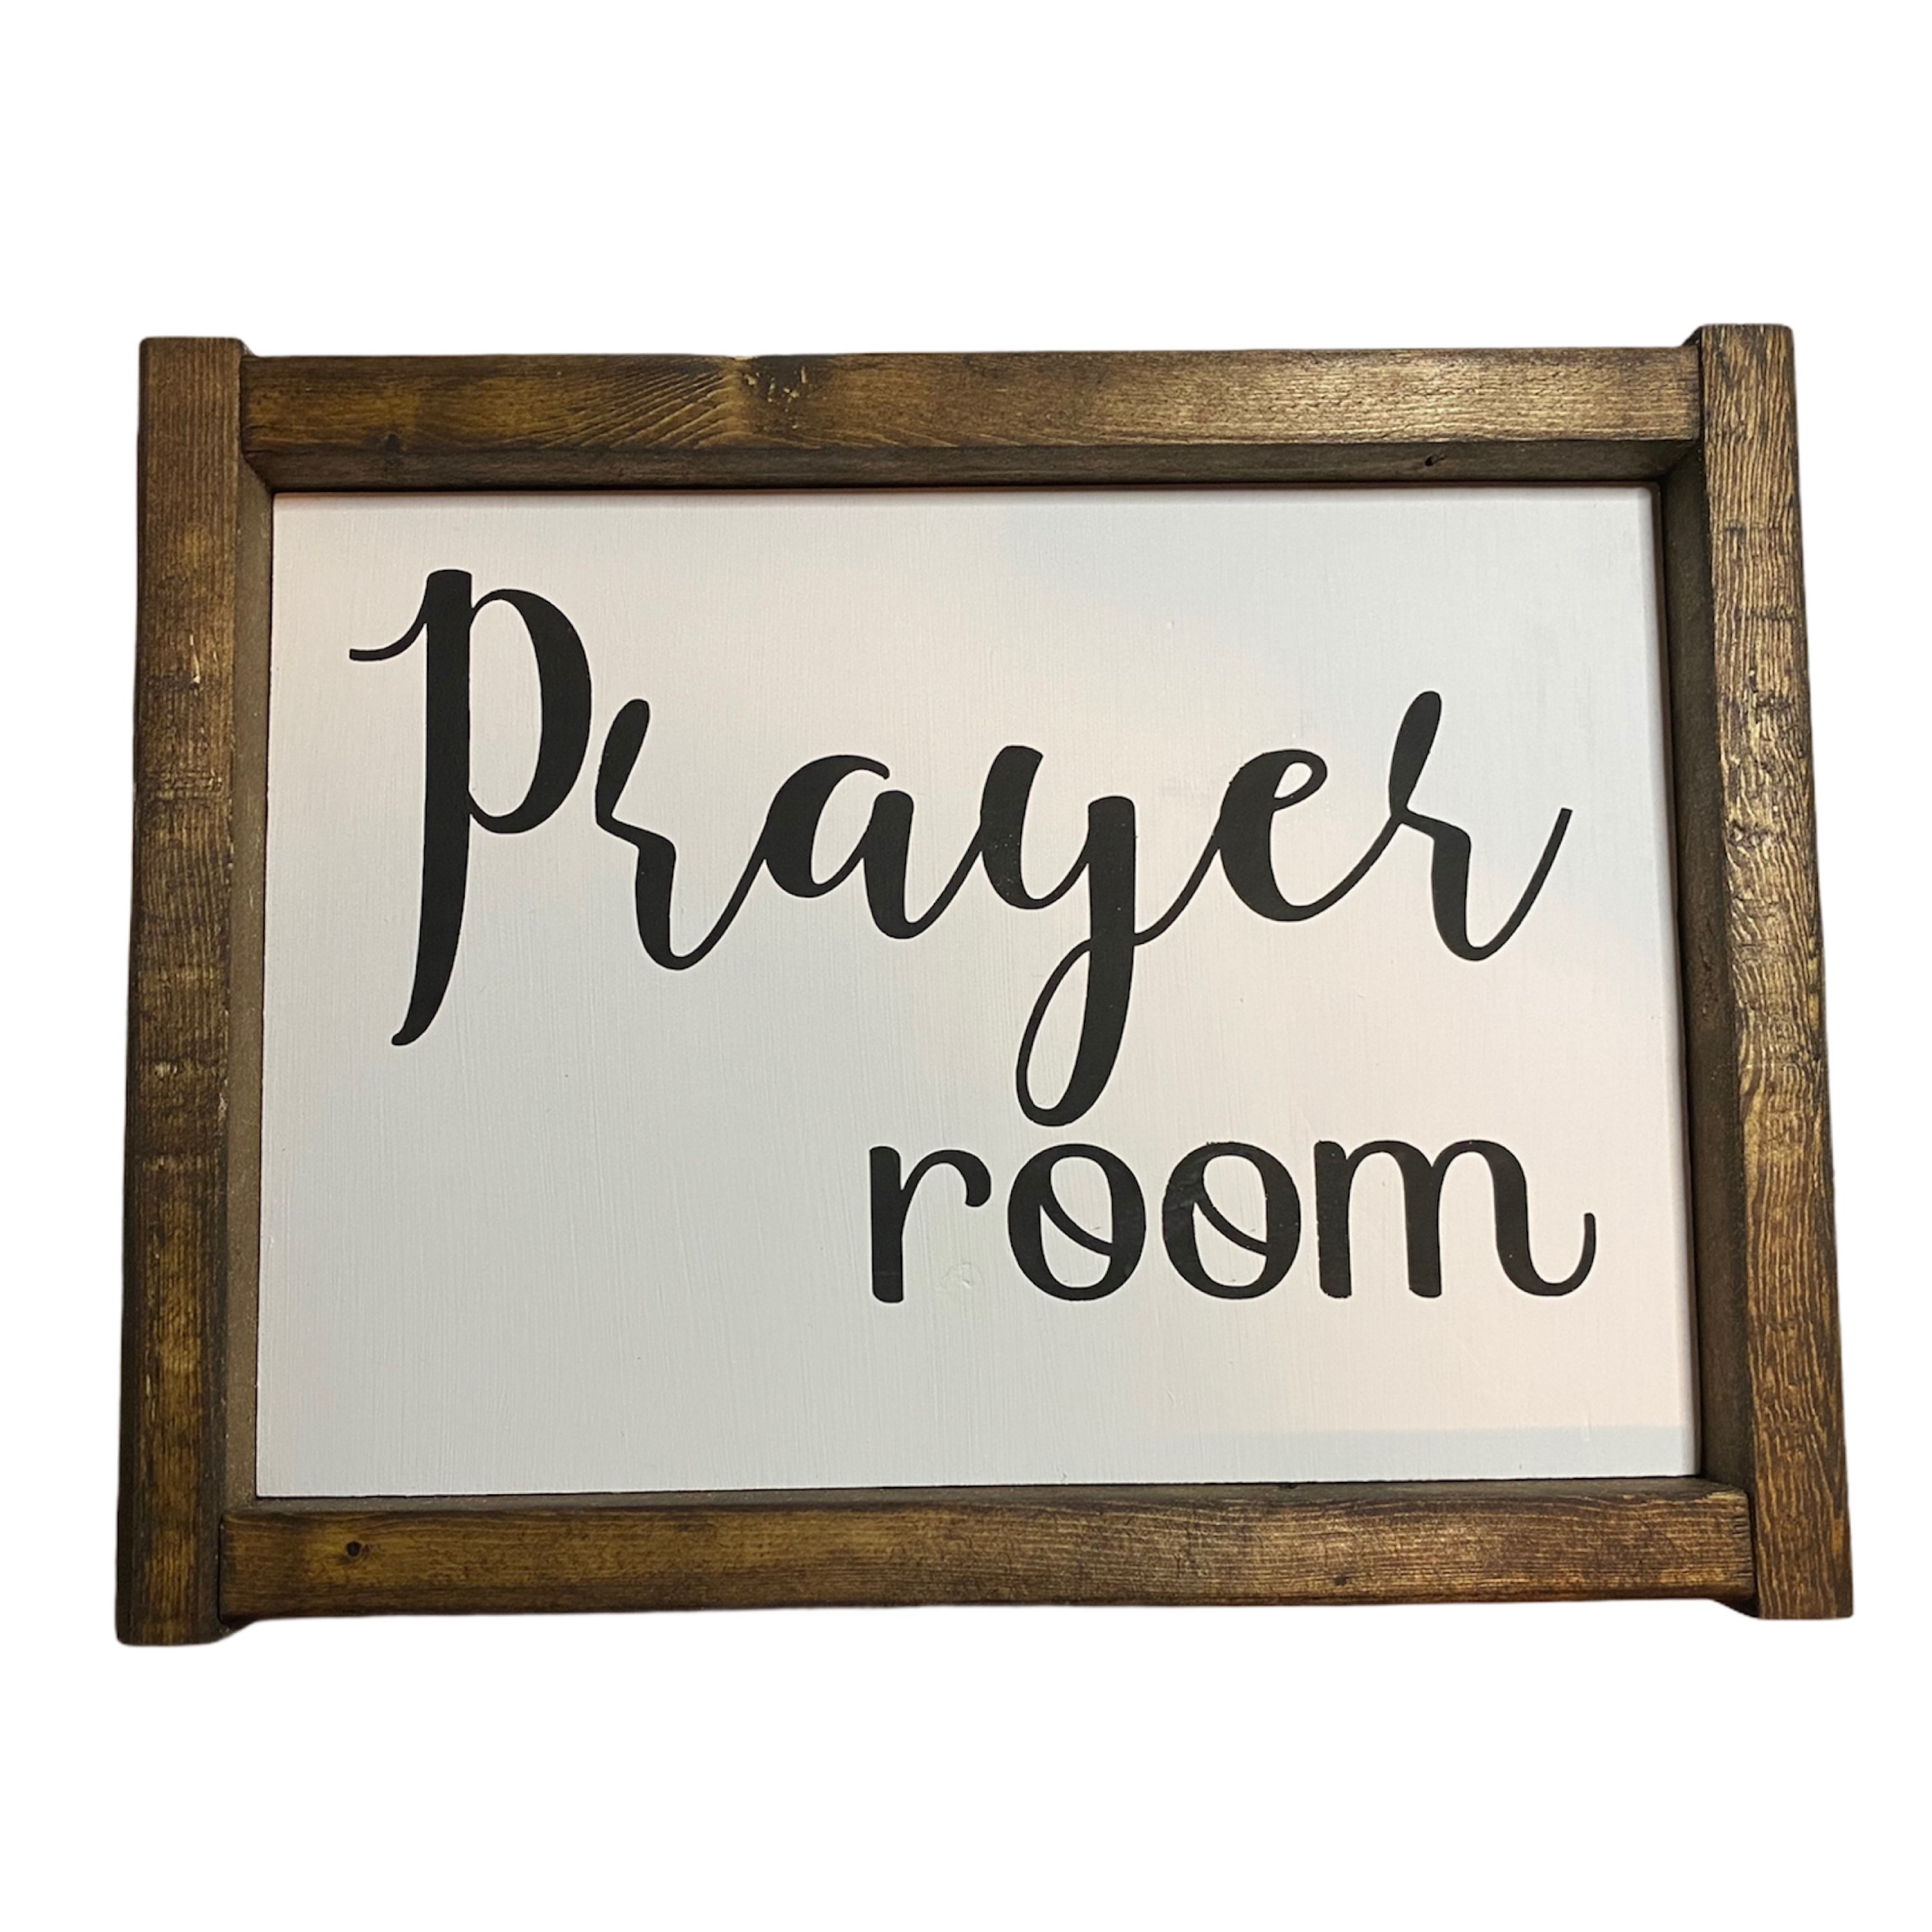 Printable Prayer Board Kit, Vintage Floral Prayer Board, Prayer Cards,  Bible Verses, Scripture on Prayer Enhance Your Prayer Life 